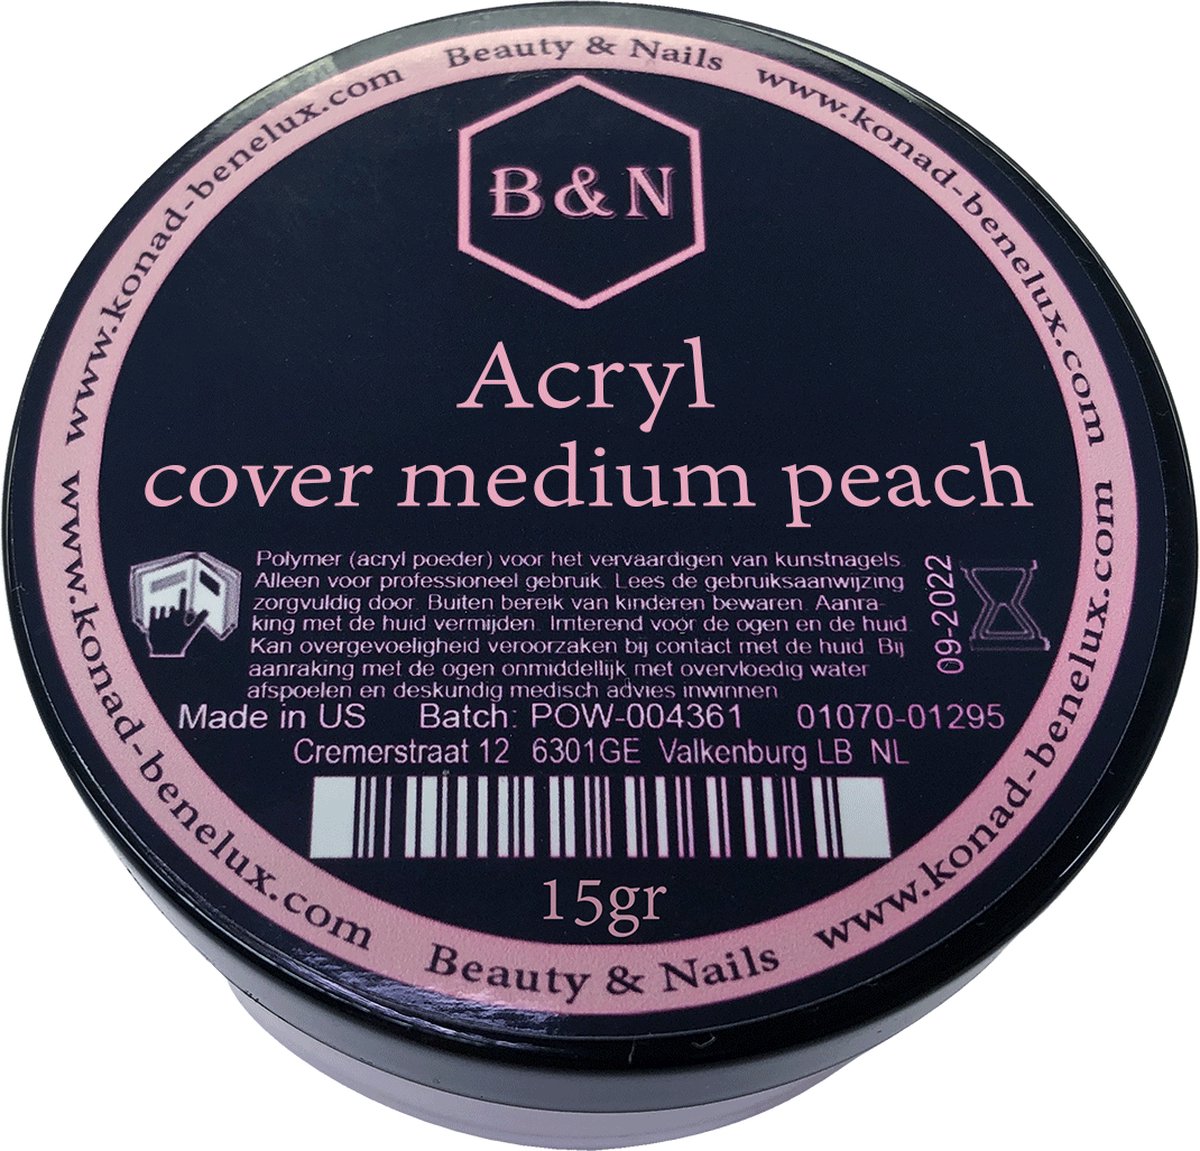 Acryl - cover medium peach - 15 gr | B&N - acrylpoeder - VEGAN - acrylpoeder